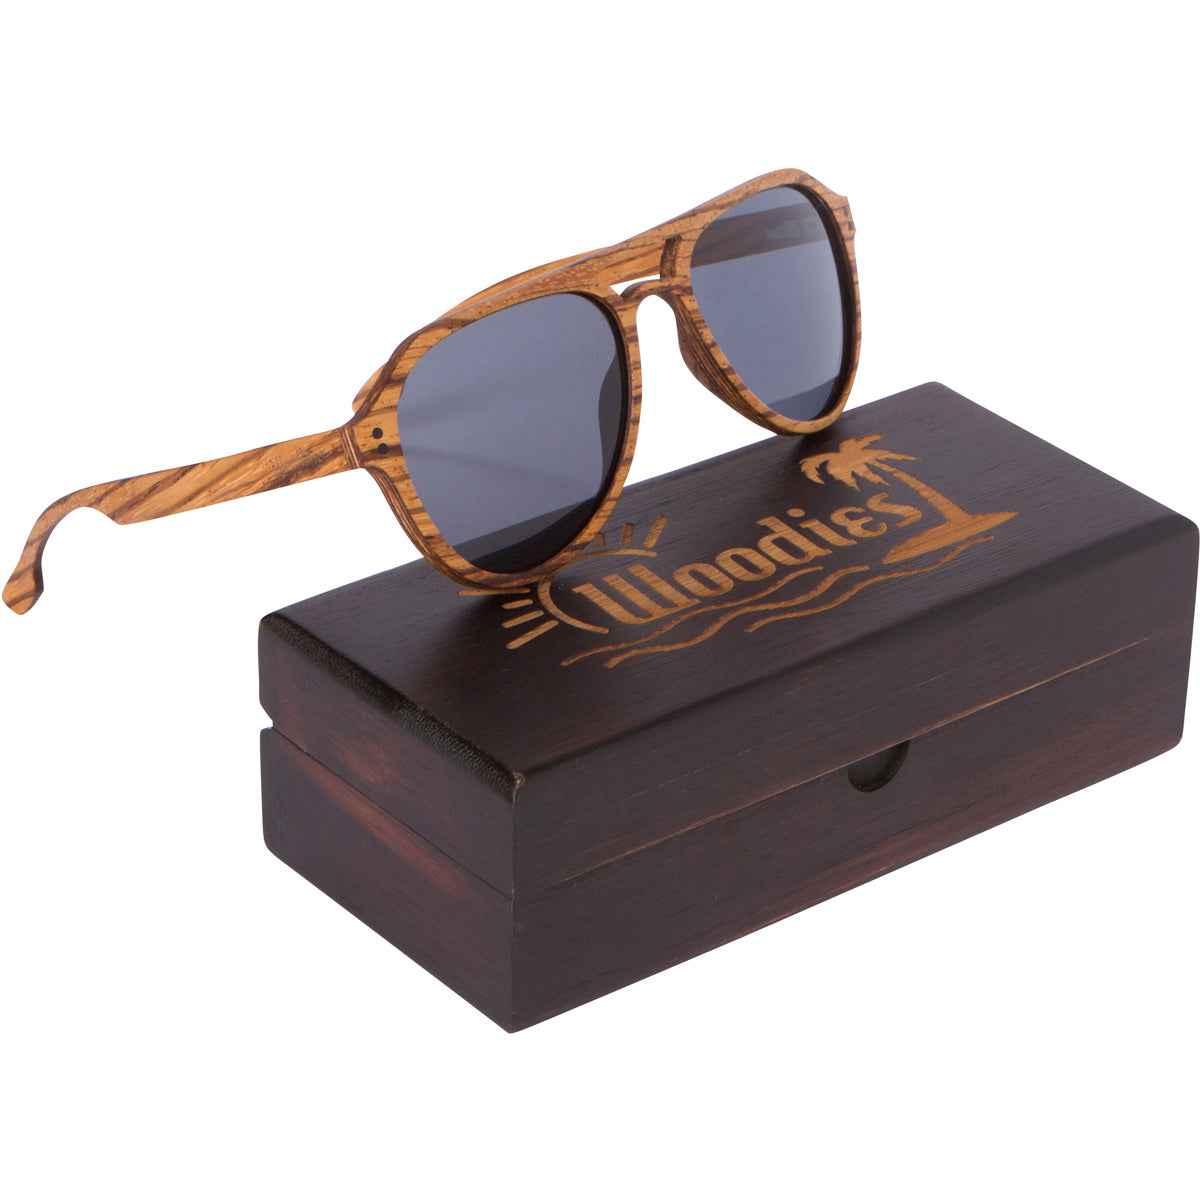 Shwood's New Aviator Line of Wooden Sunglasses